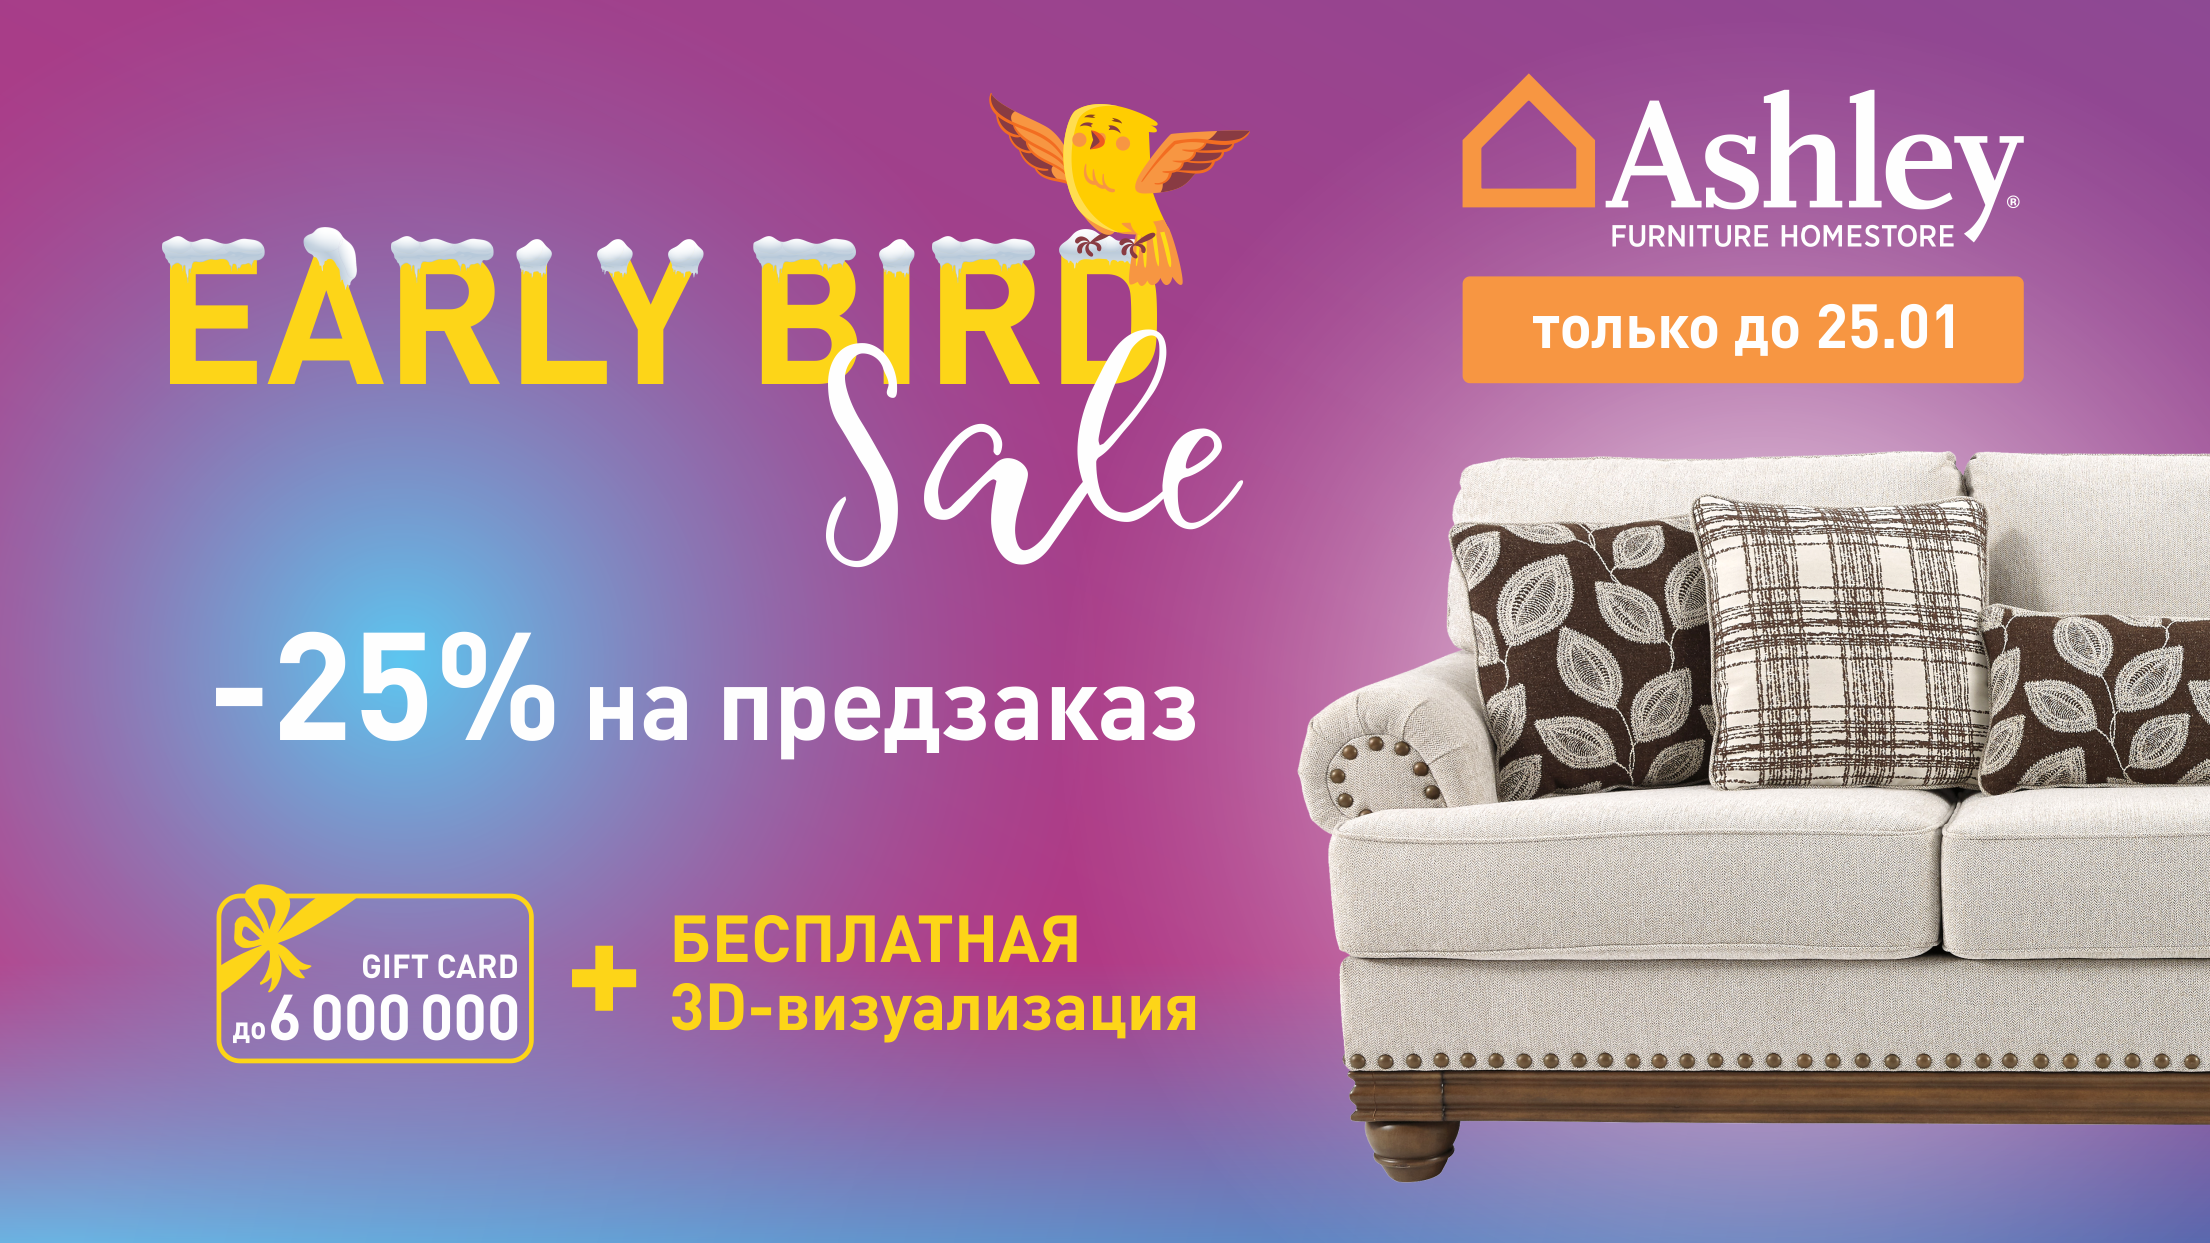 Шоурум Ashley Furniture HomeStore объявляет о запуске акции Early Bird Sale